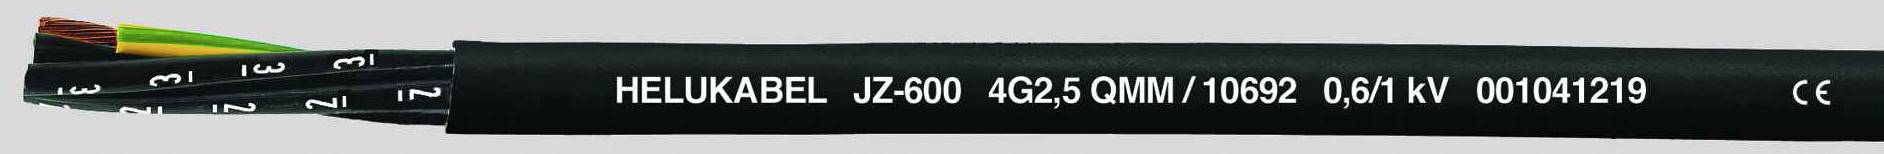 HELUKABEL JZ-600 Steuerleitung 10 G 1.50 mm² Schwarz 10668-1000 1000 m